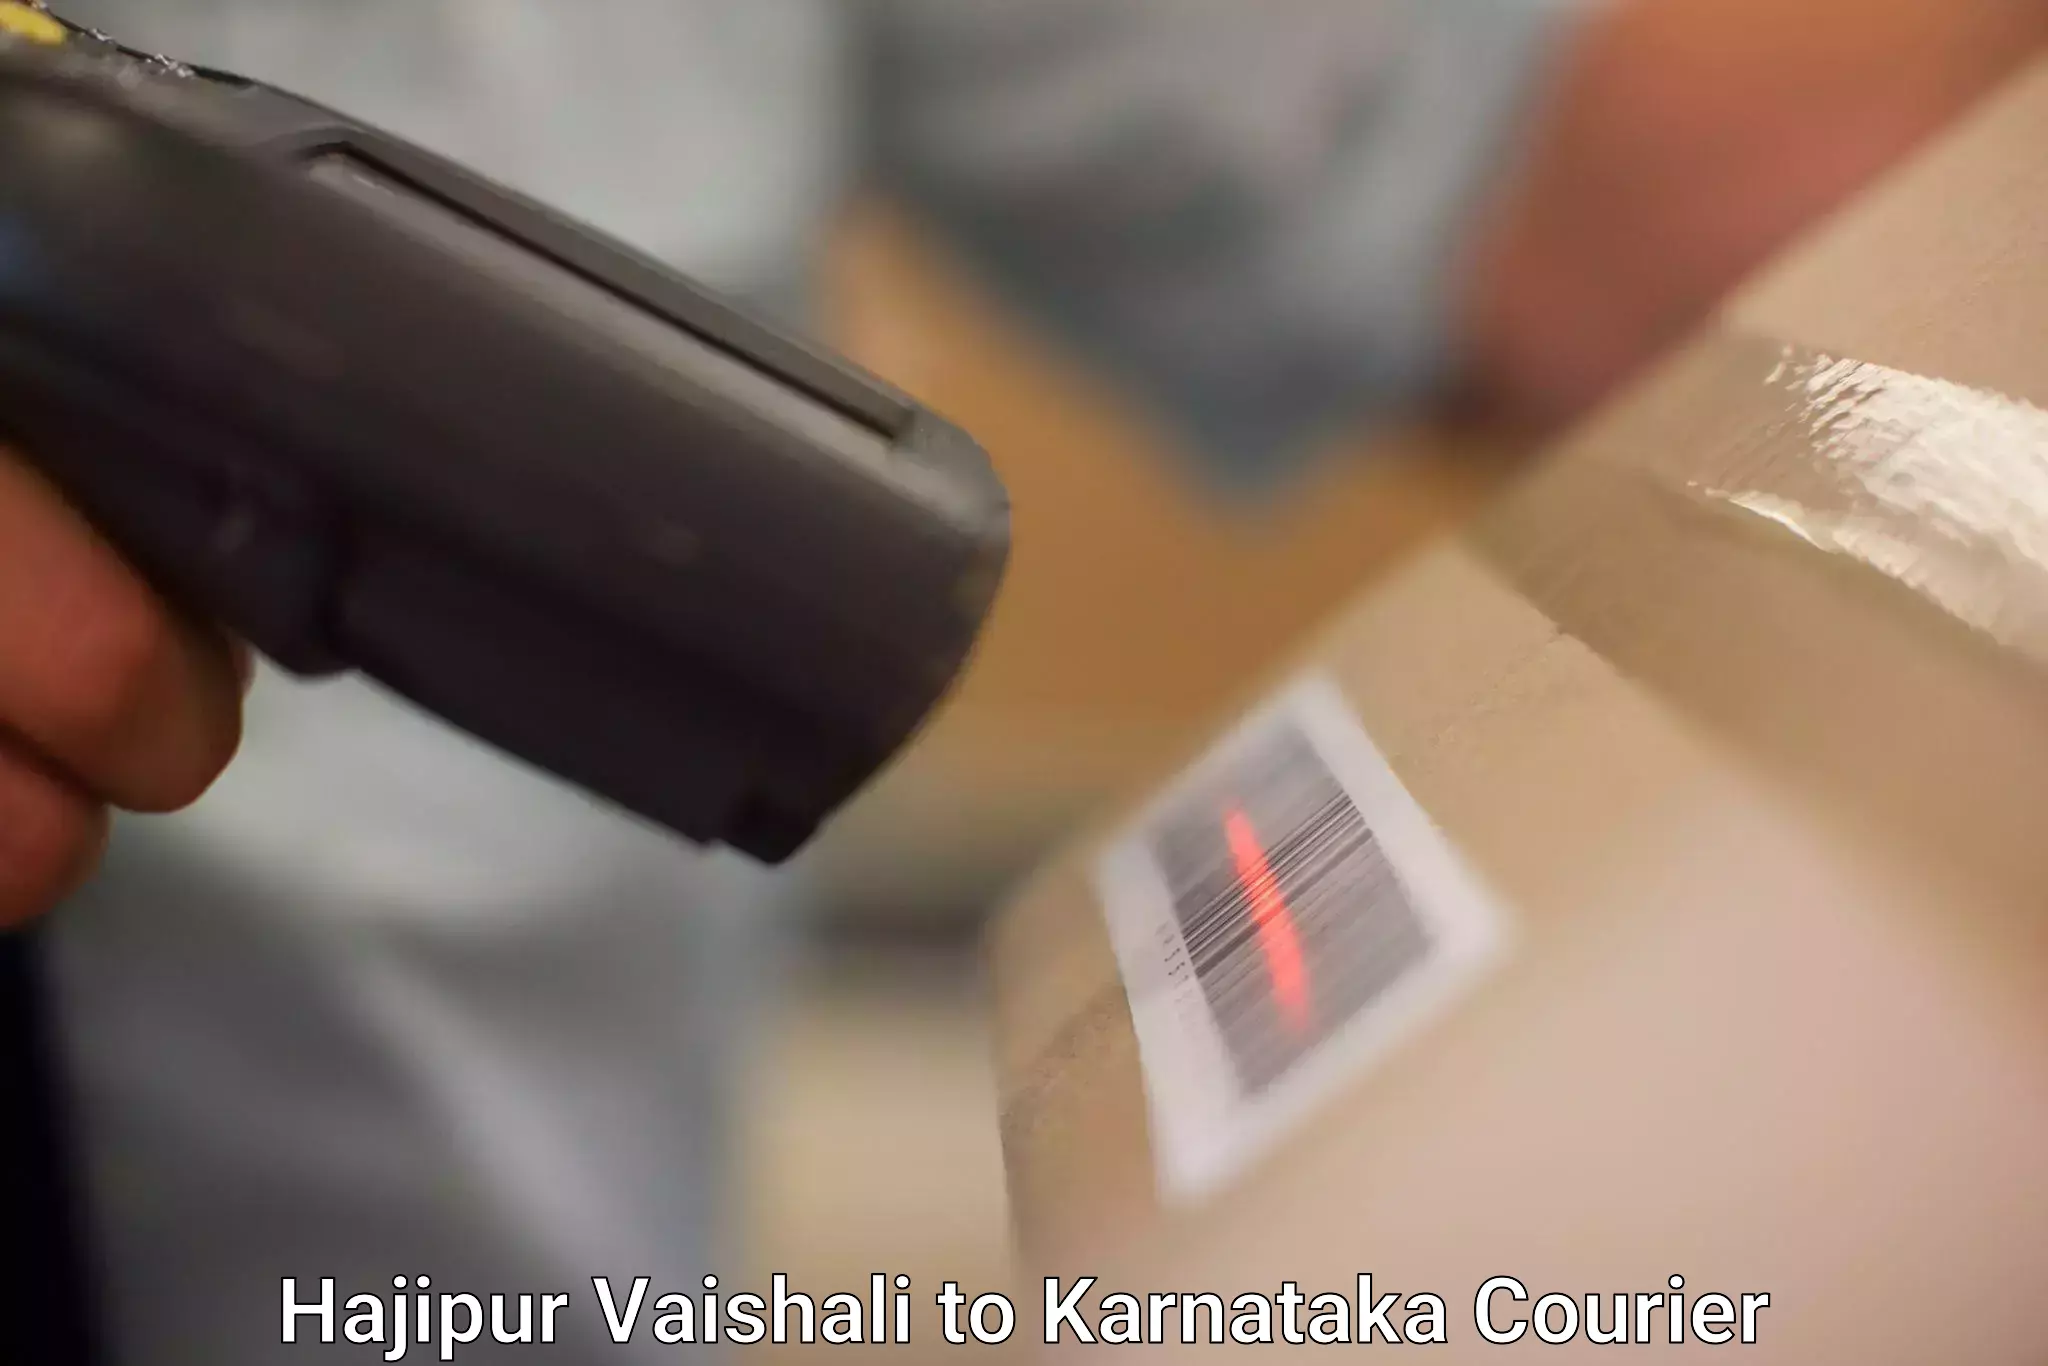 Advanced package delivery Hajipur Vaishali to Kanjarakatte